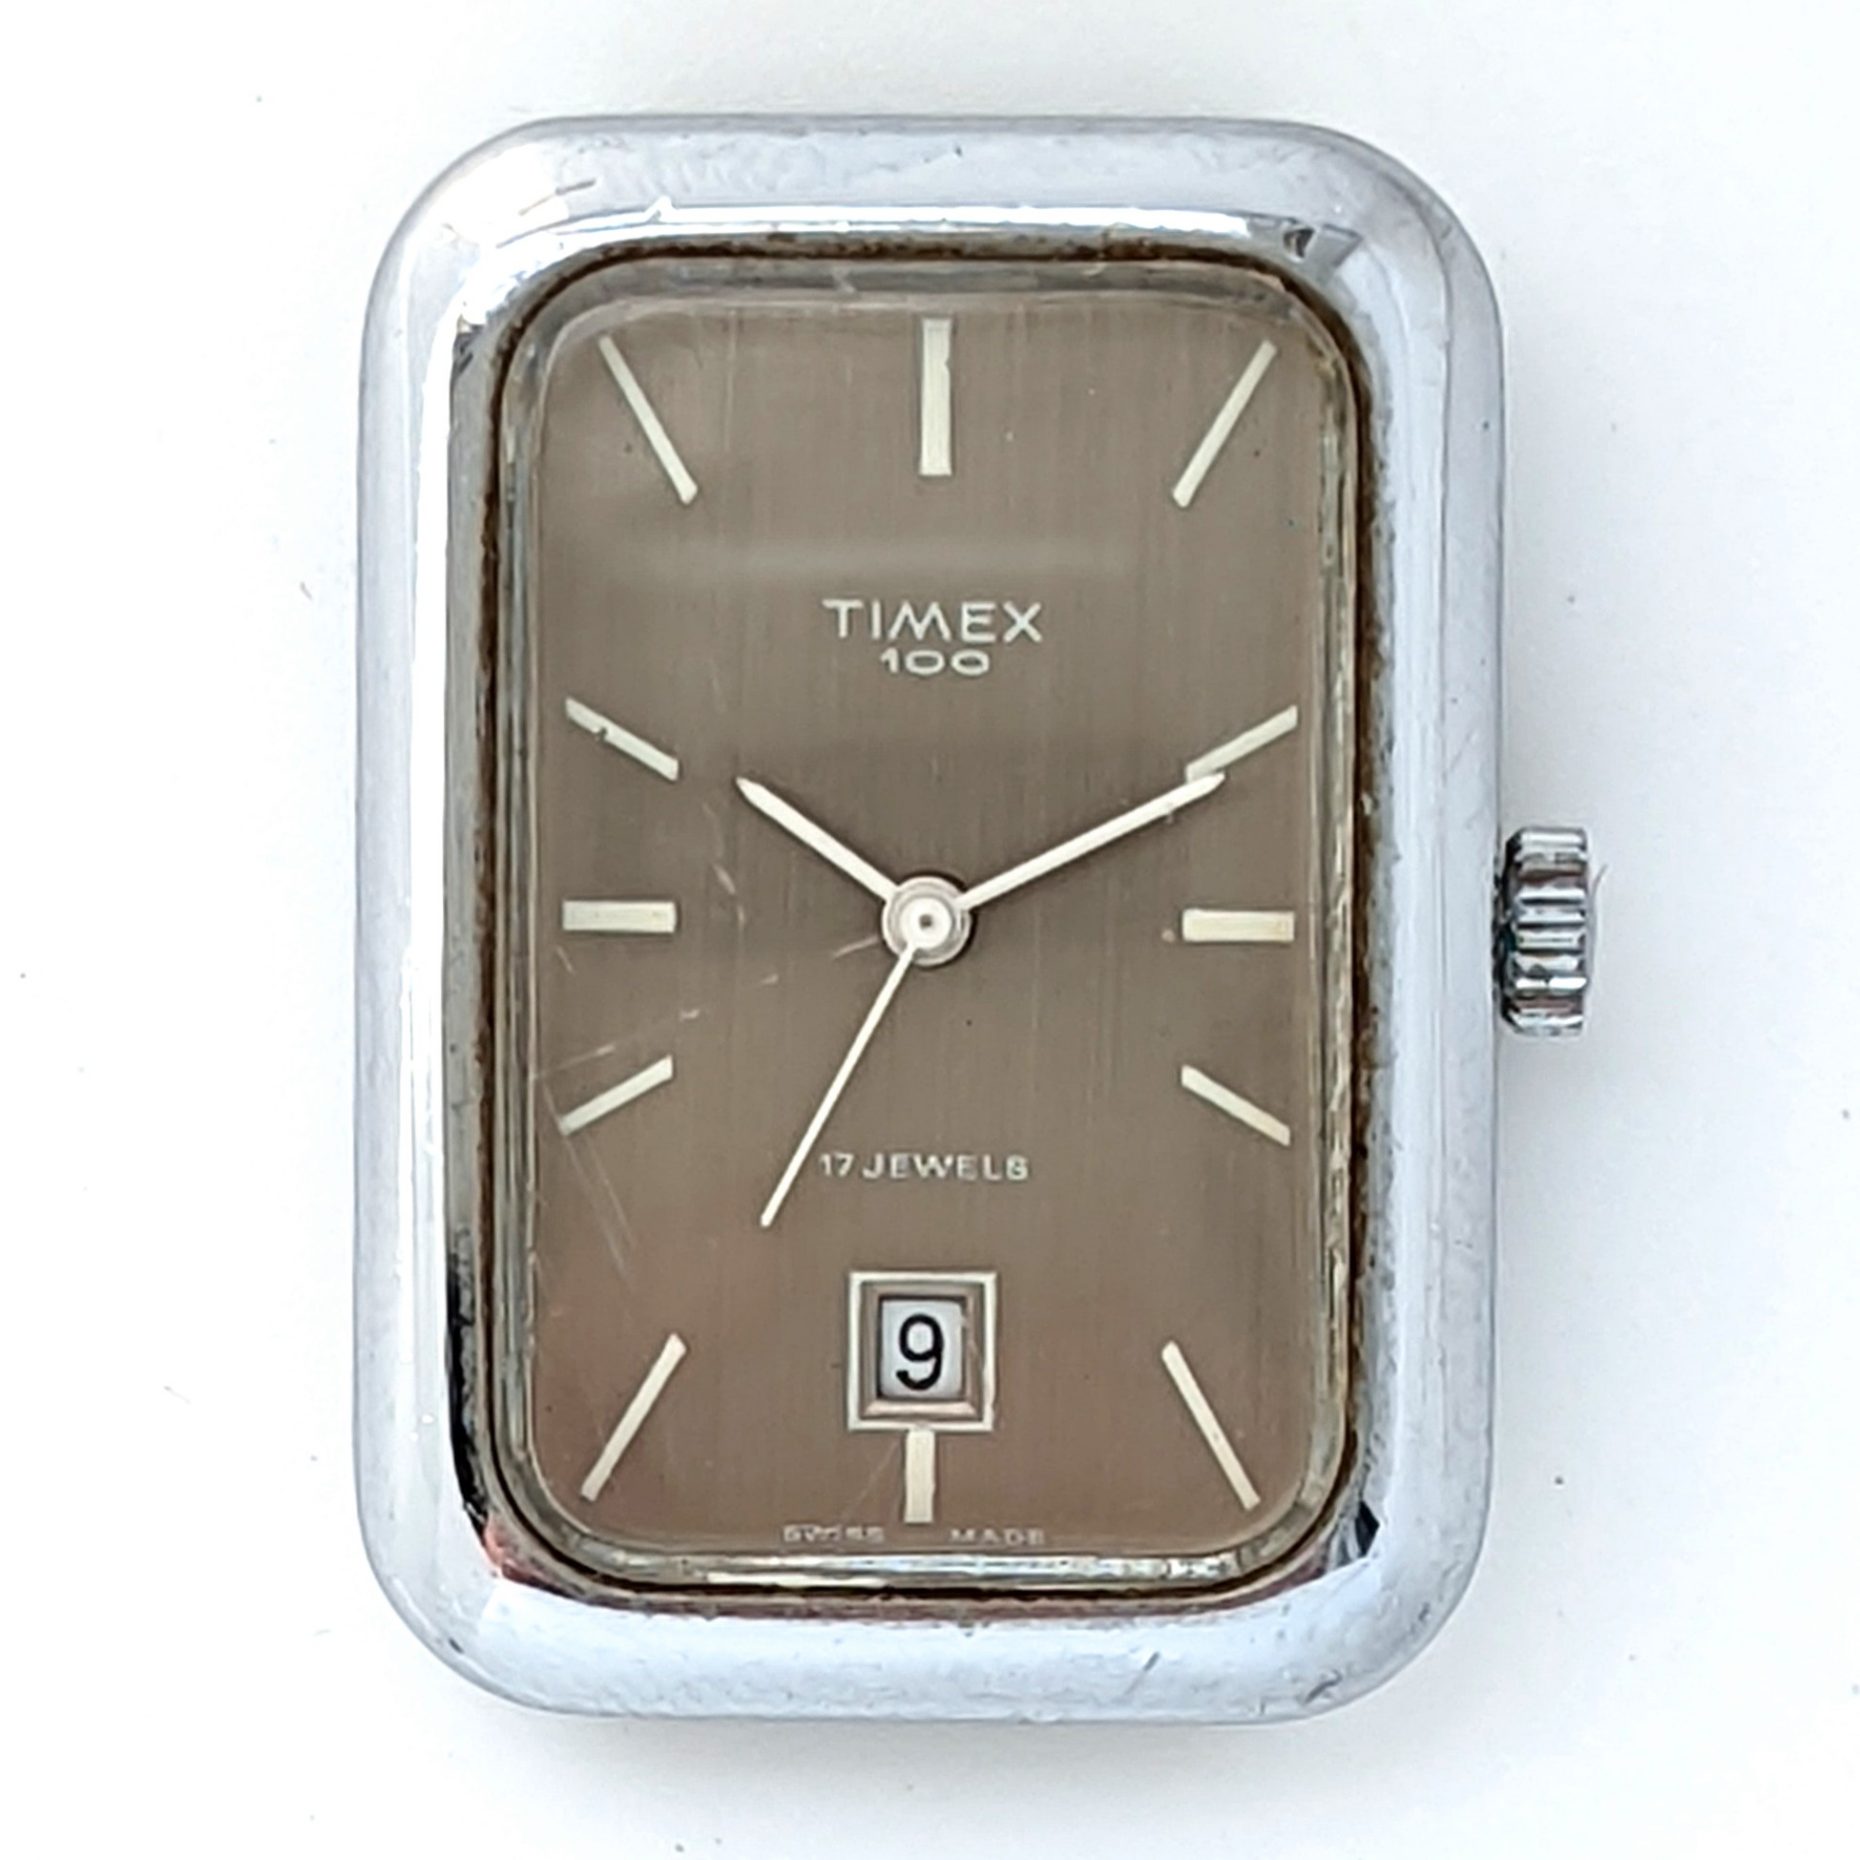 Timex 100 1975 Ref. 67550 18175